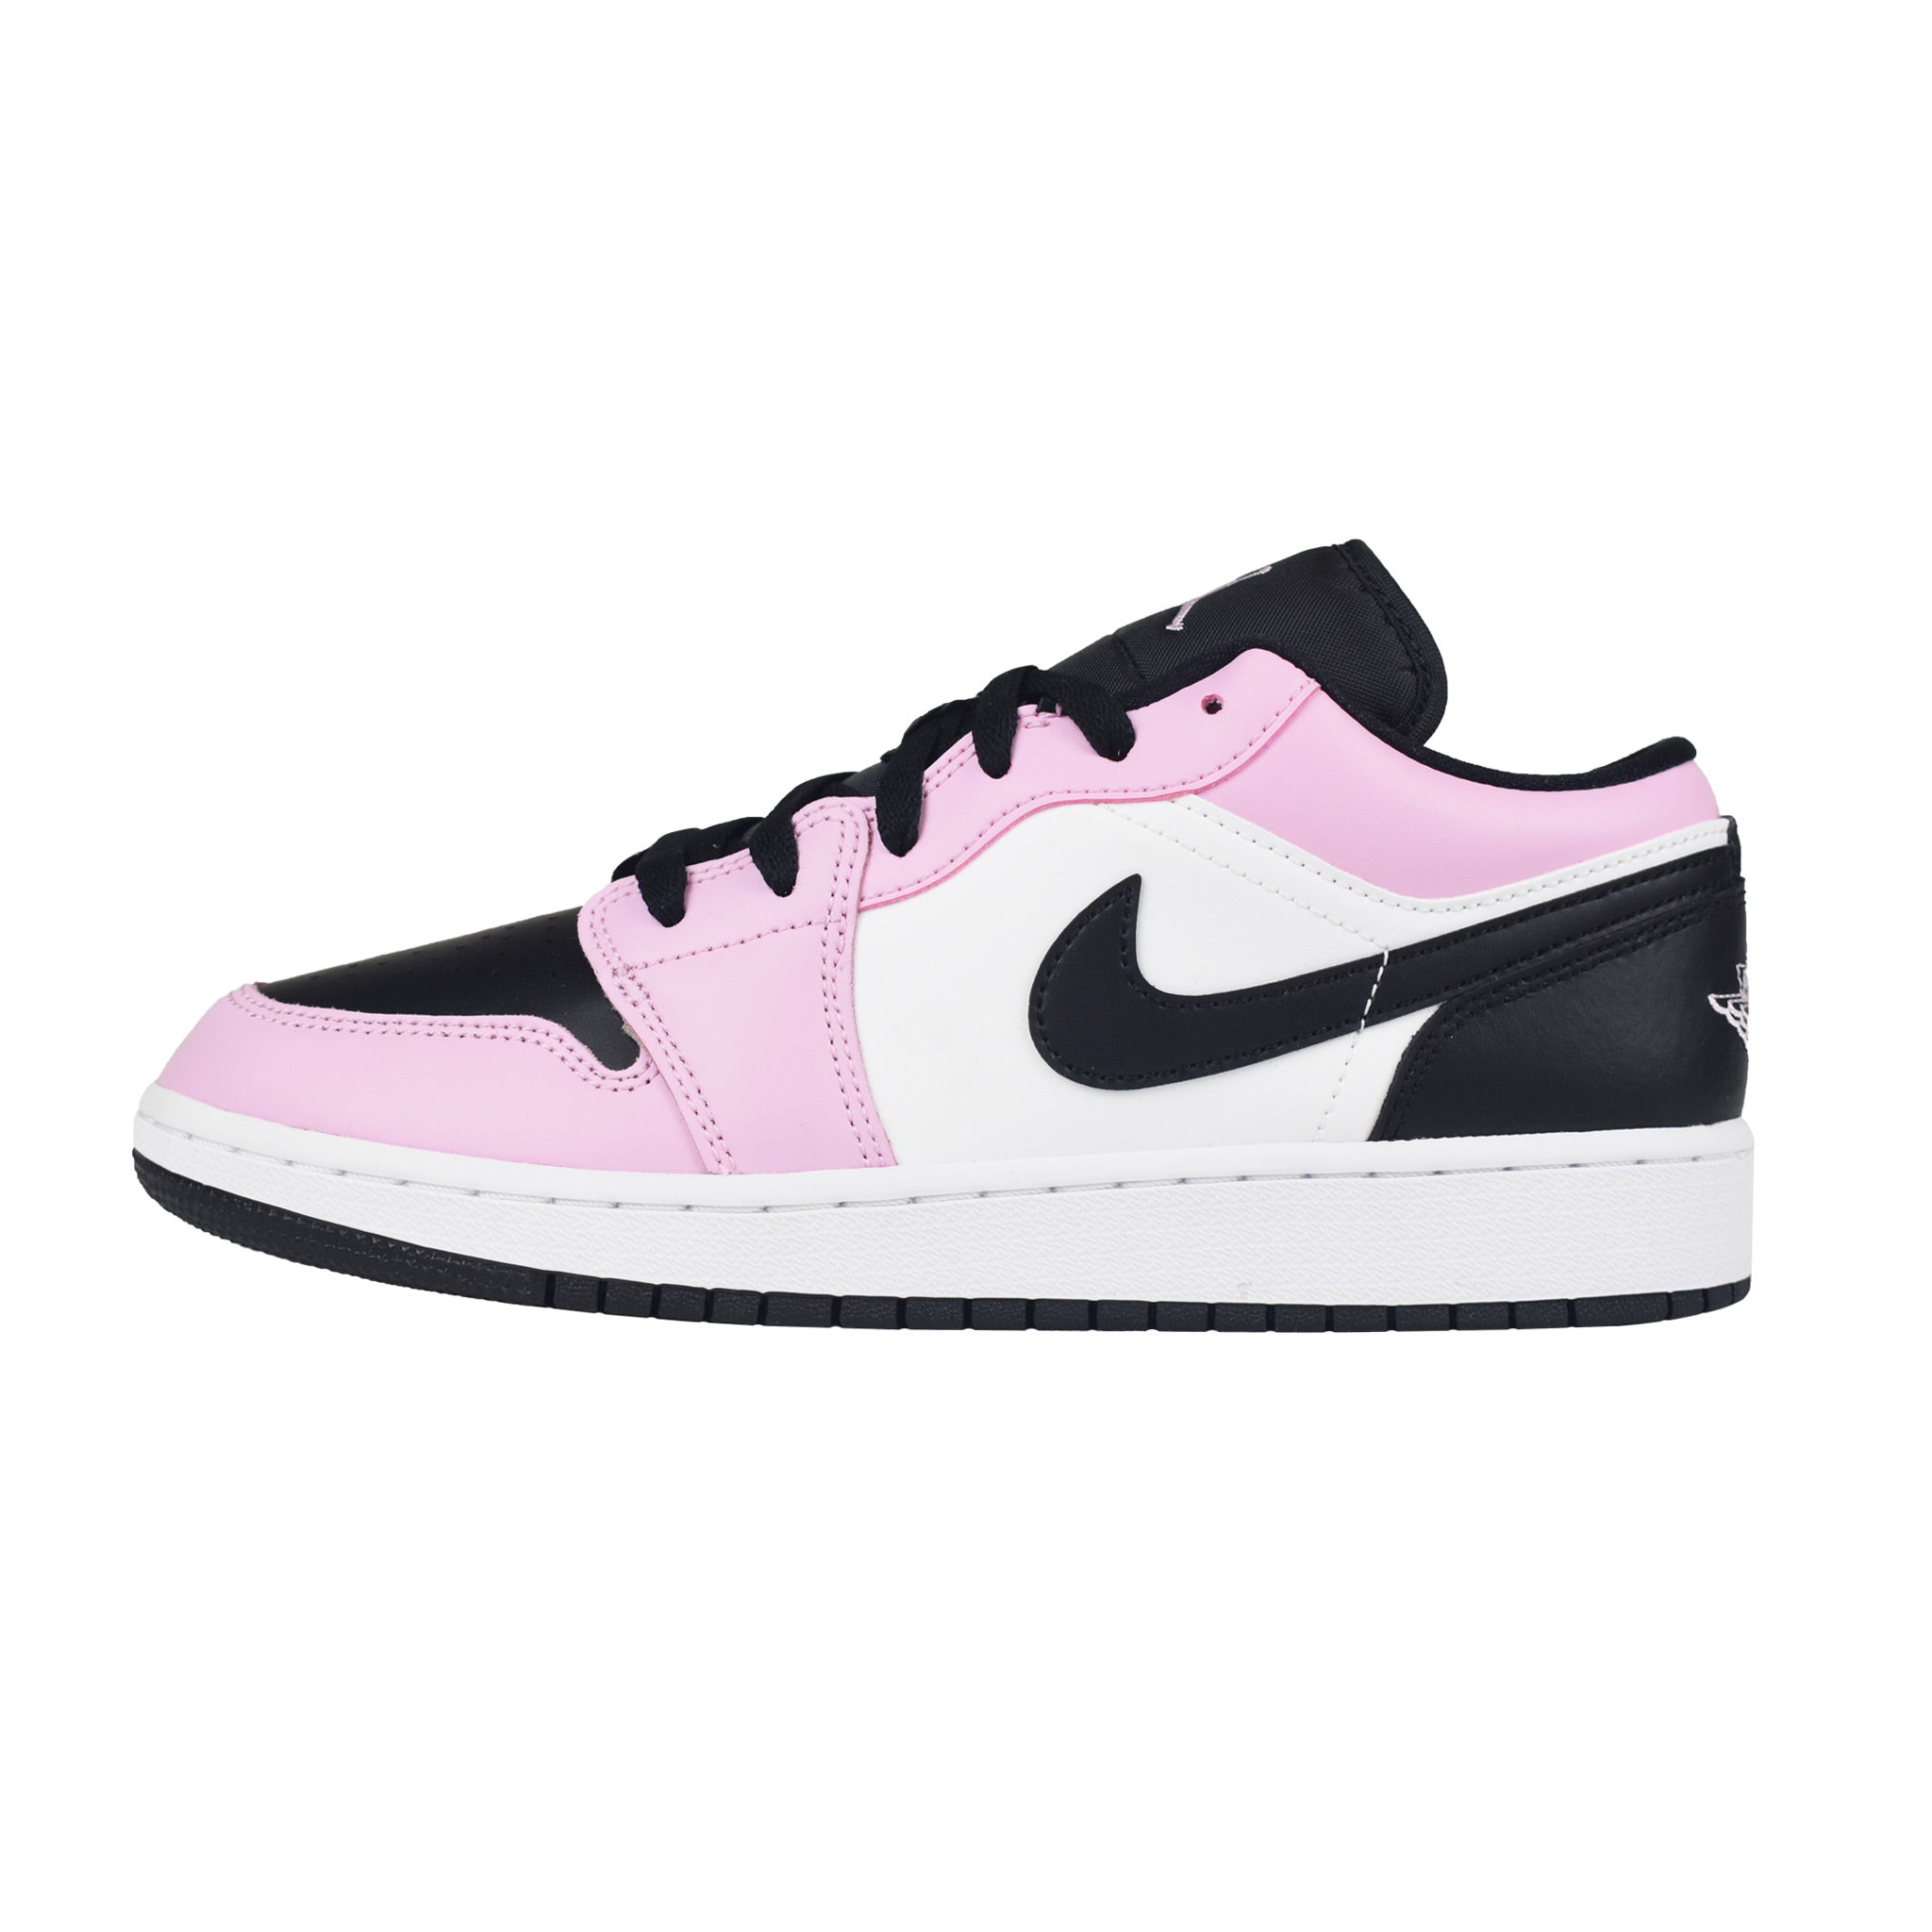 Nike Air Jordan 1 Low - Arctic Pink | Australia New Zealand